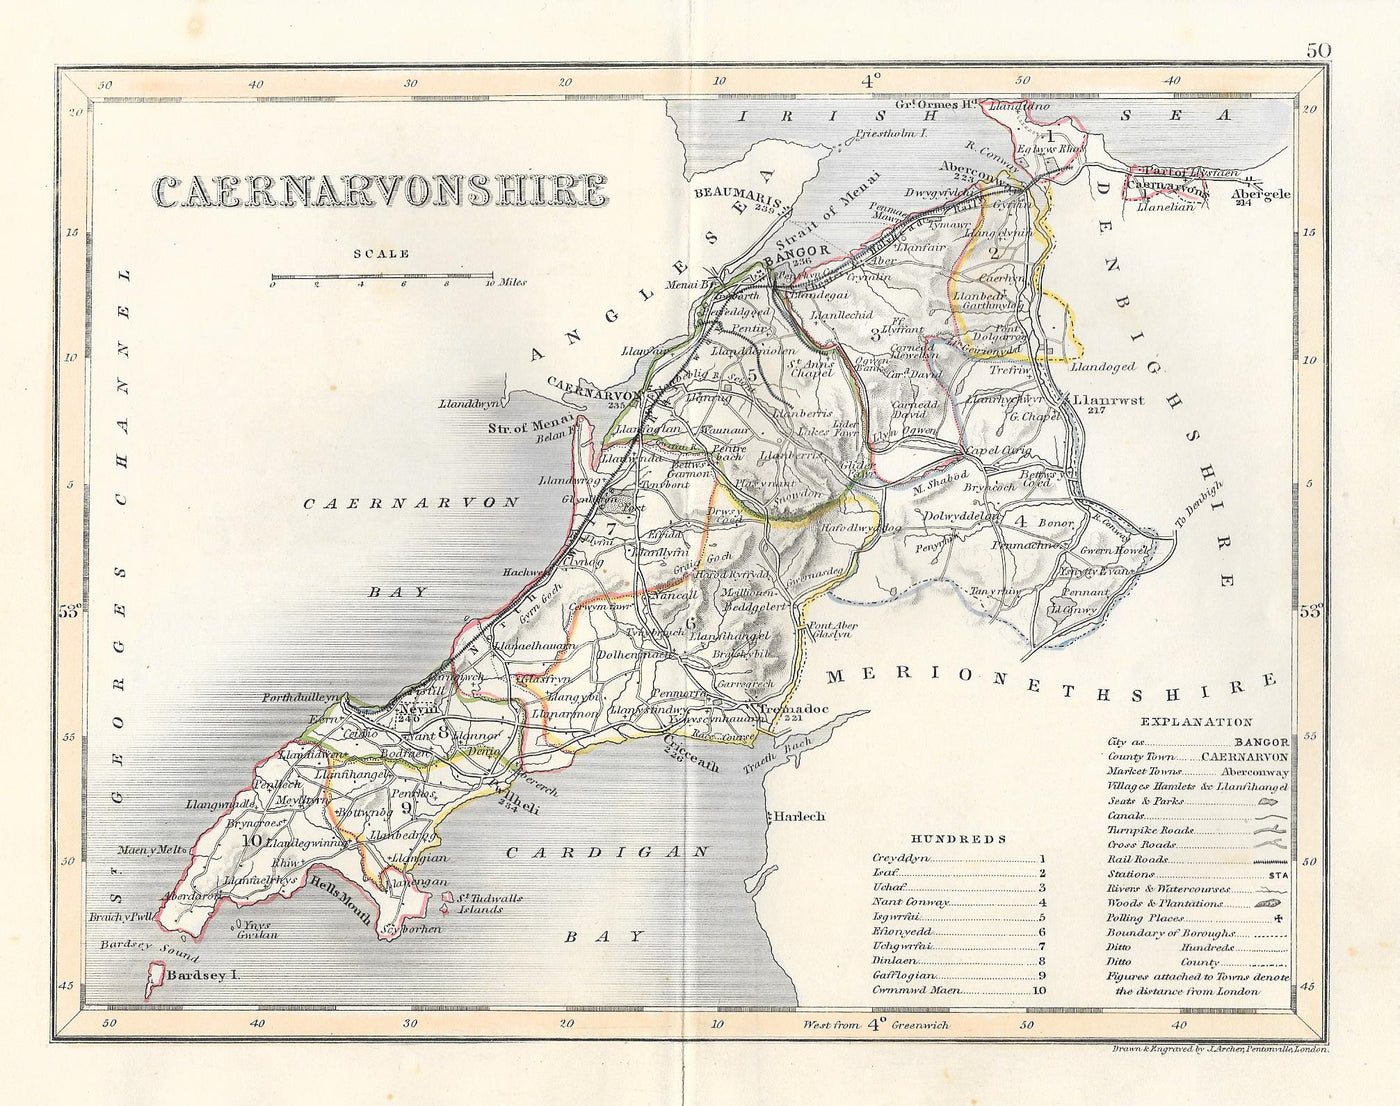 Caernarfonshire Caernarvonshire Carnarvonshire Cymru Wales antique map